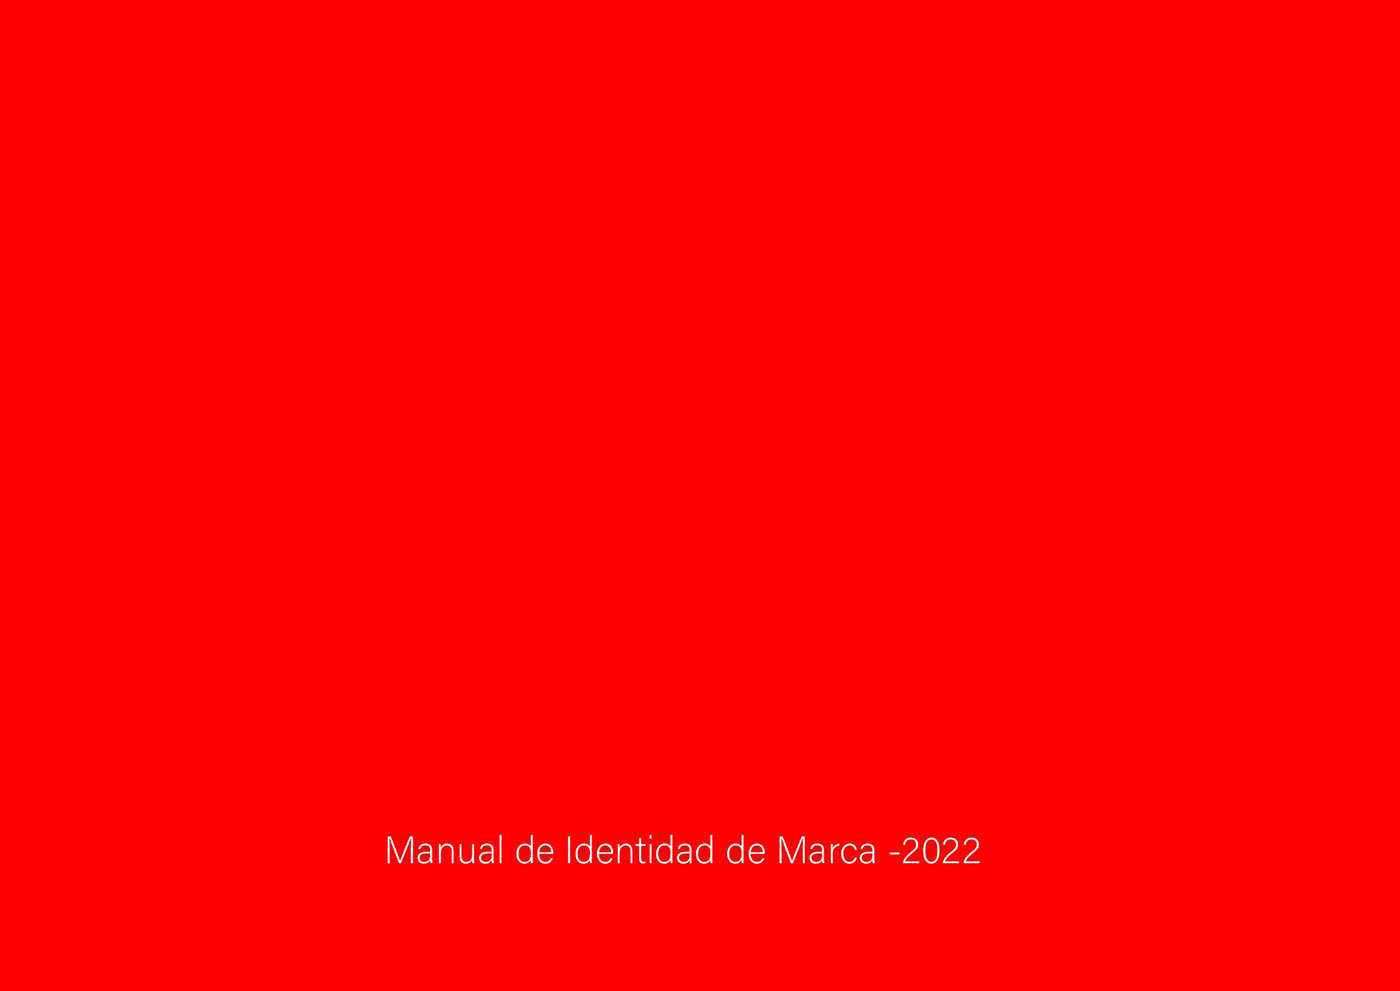 Image may contain: screenshot, red and maroon